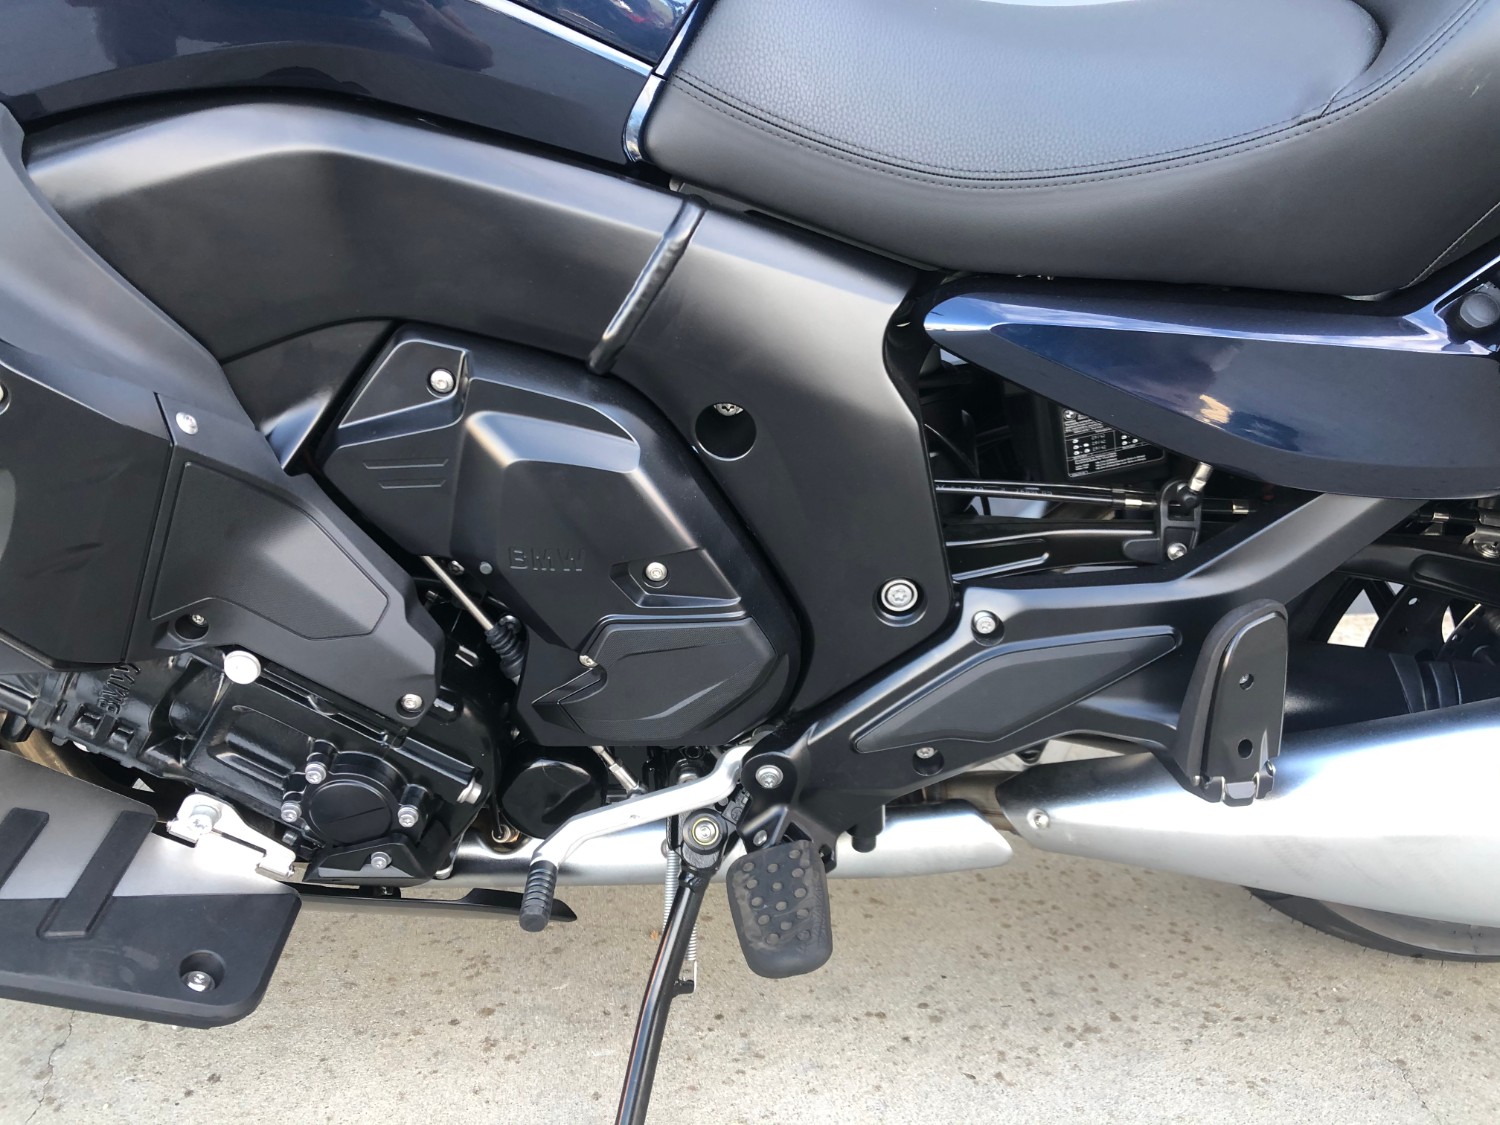 2019 BMW K1600 B Deluxe Motorcycle Image 6